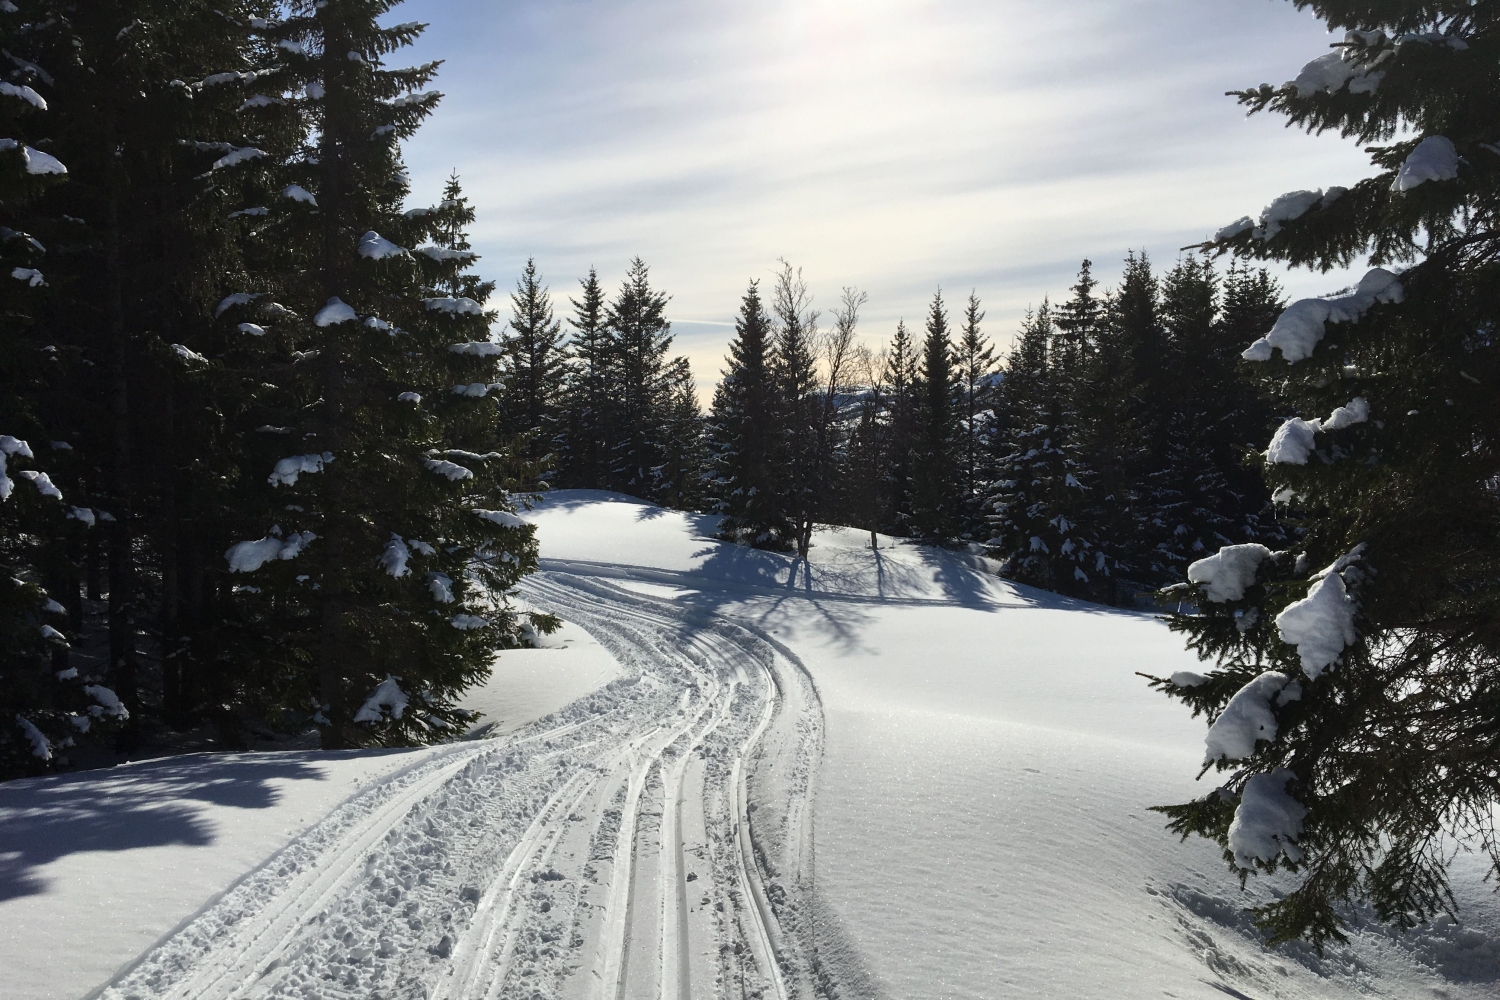 Ski tracks on a sunny day